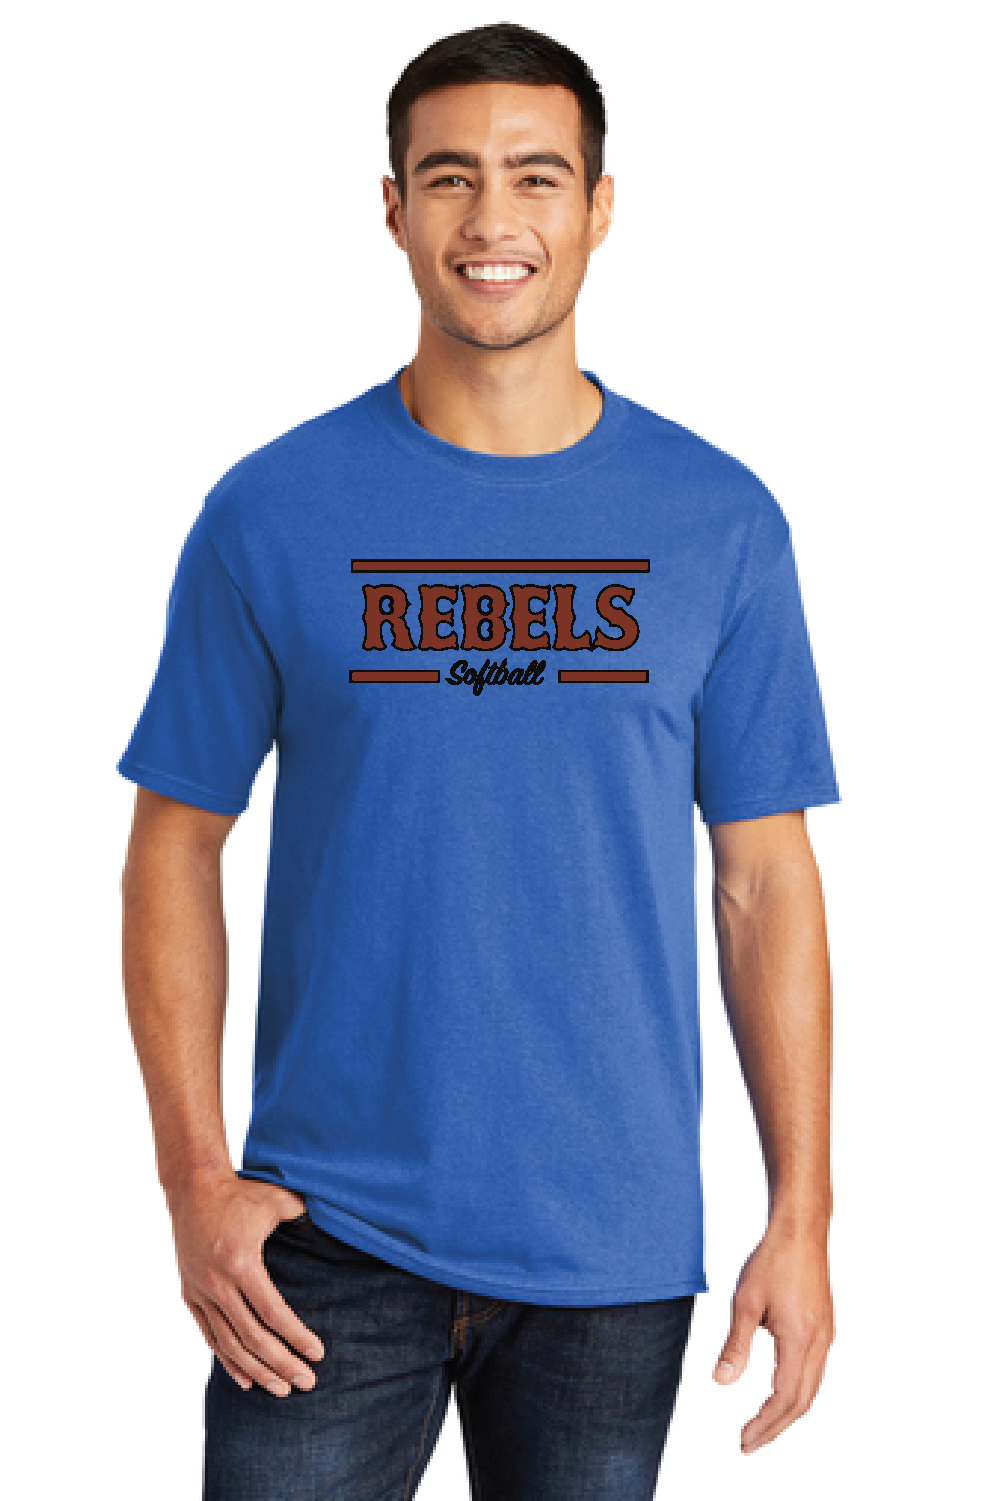 Rebels Softball Mens/Unisex Tee